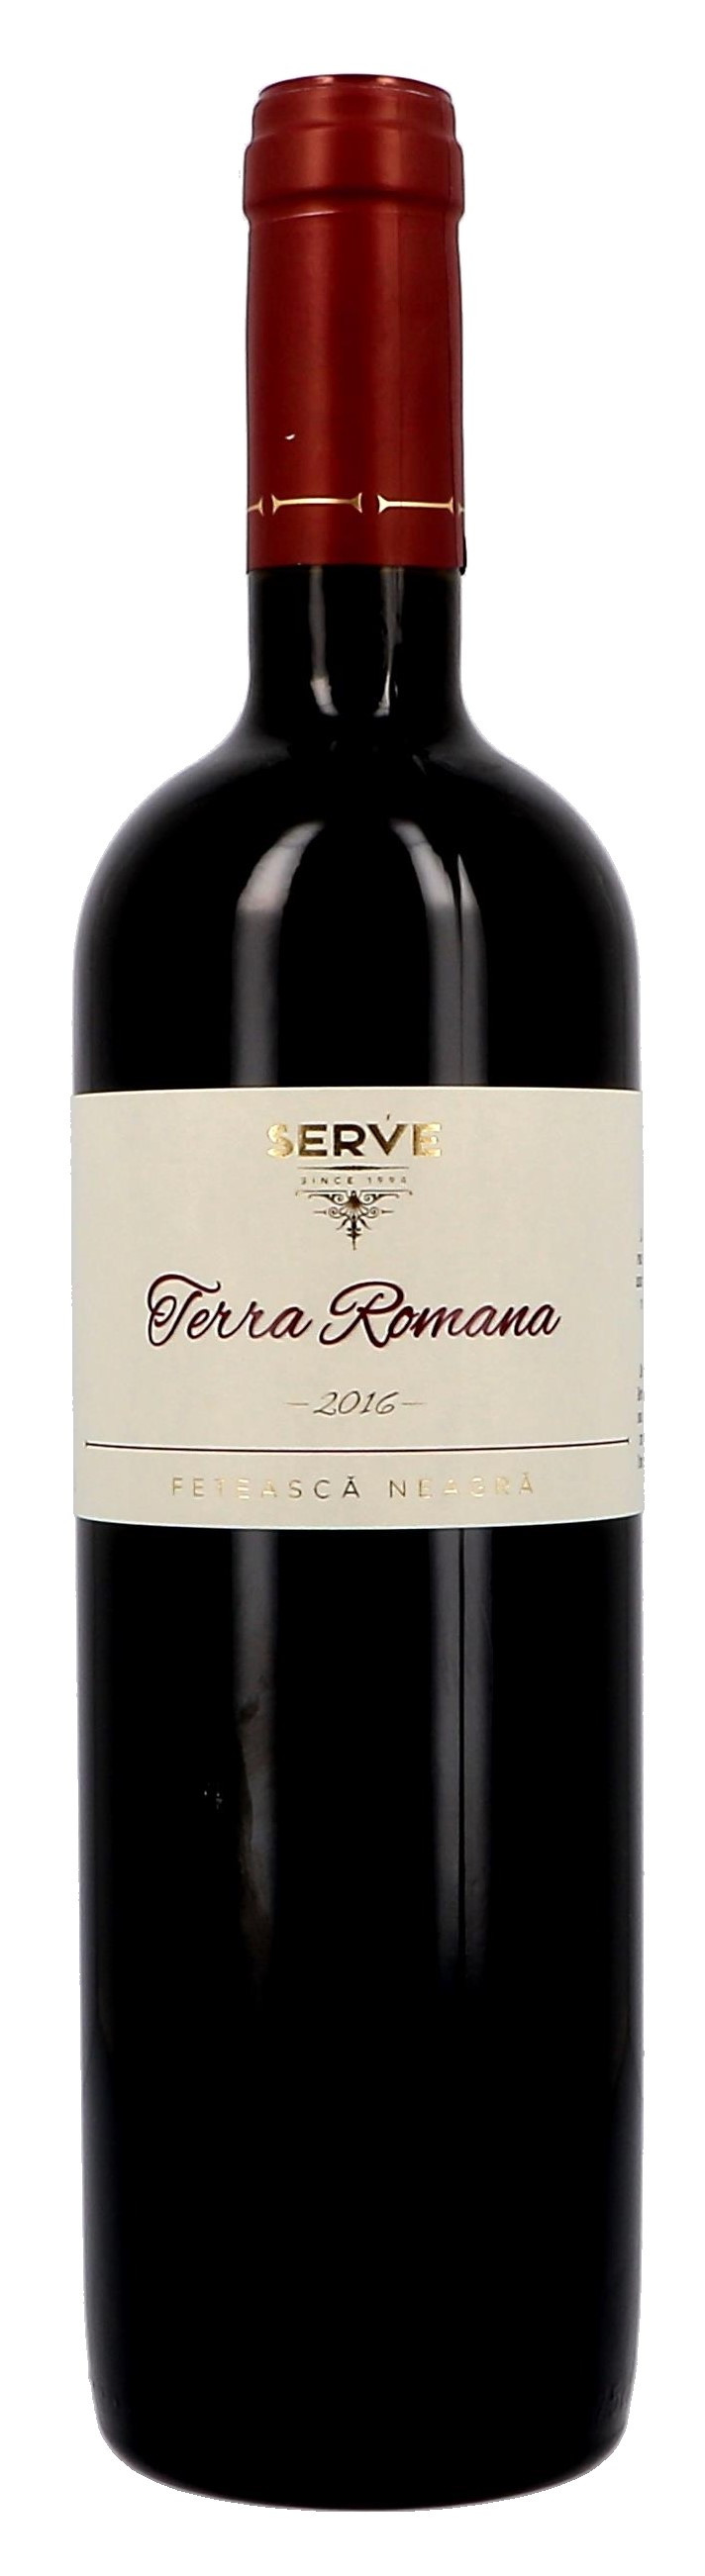 Serve Terra Romana Feteasca Neagra 75cl Roumanie Vin